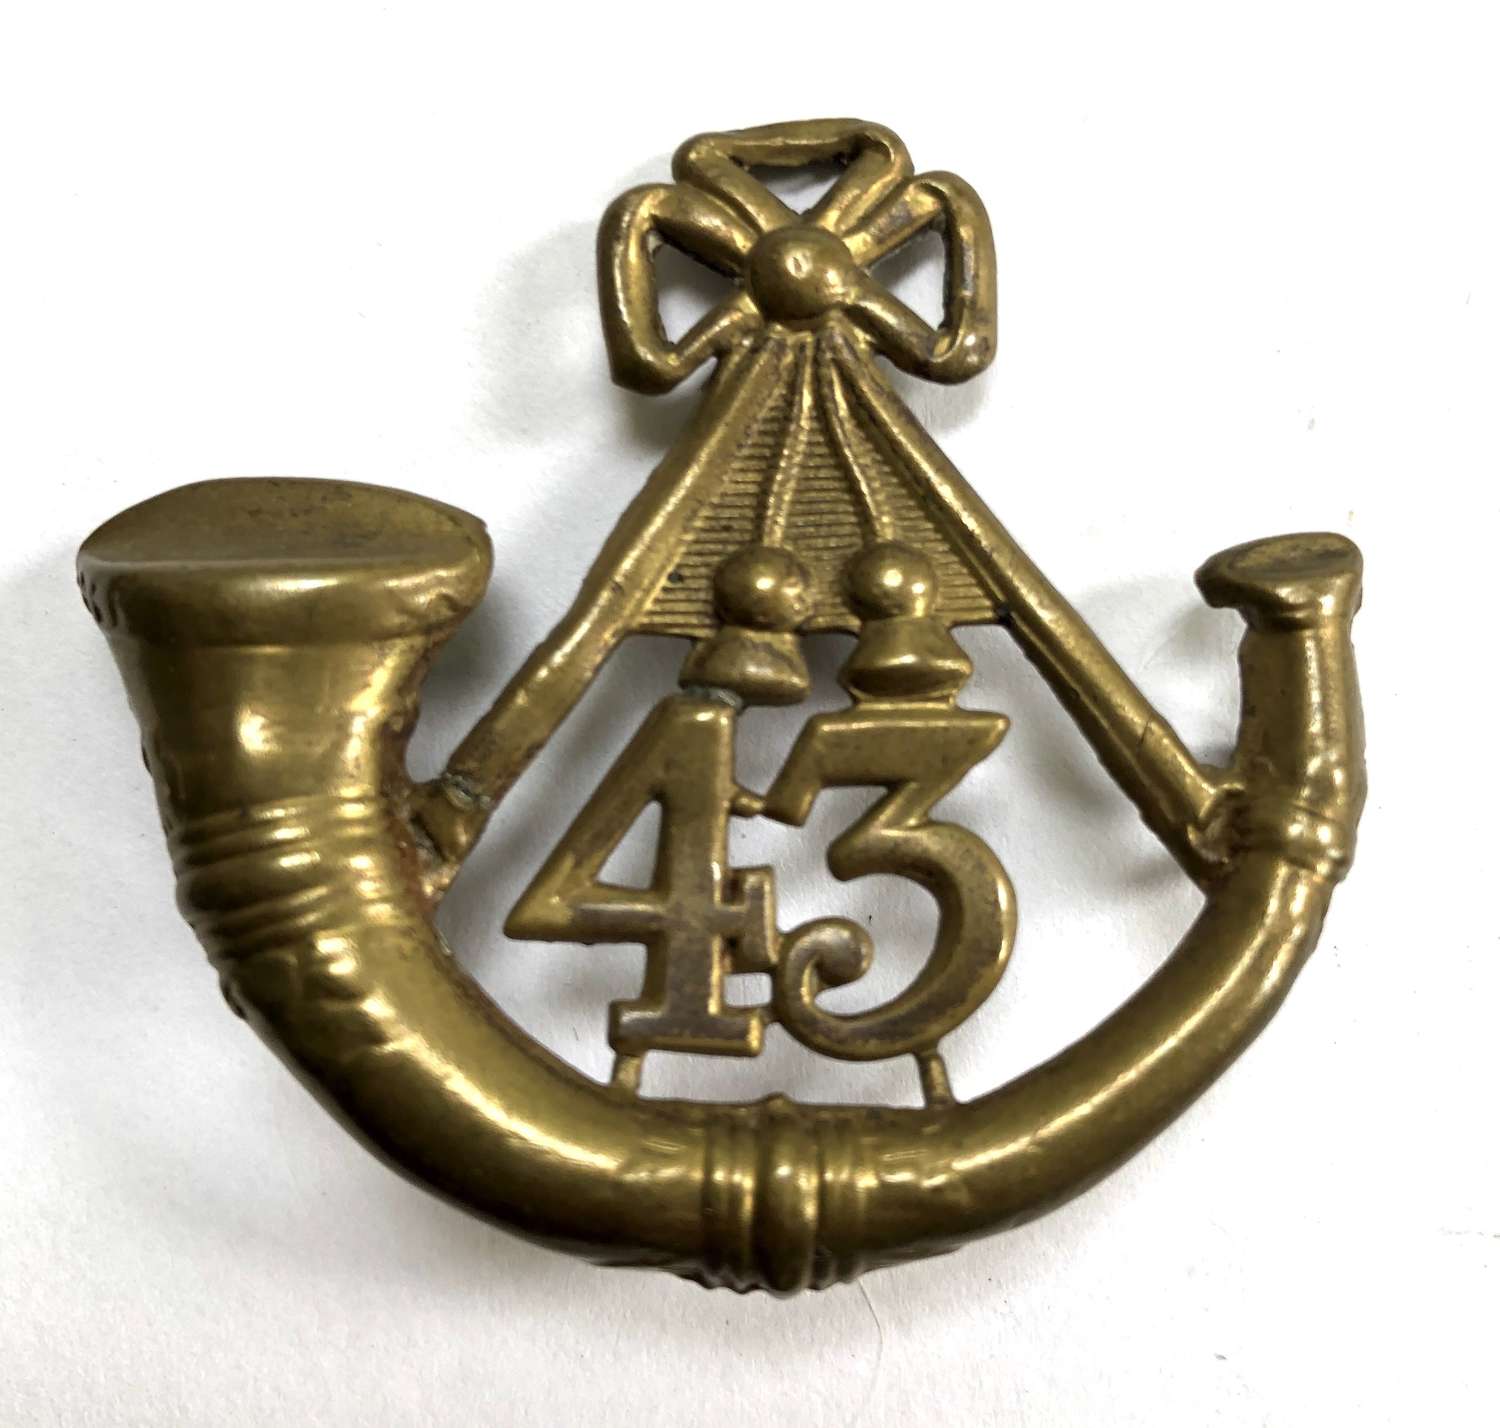 43rd (Monmouthshire Light Infantry) Regiment glengarry badge c1874-81